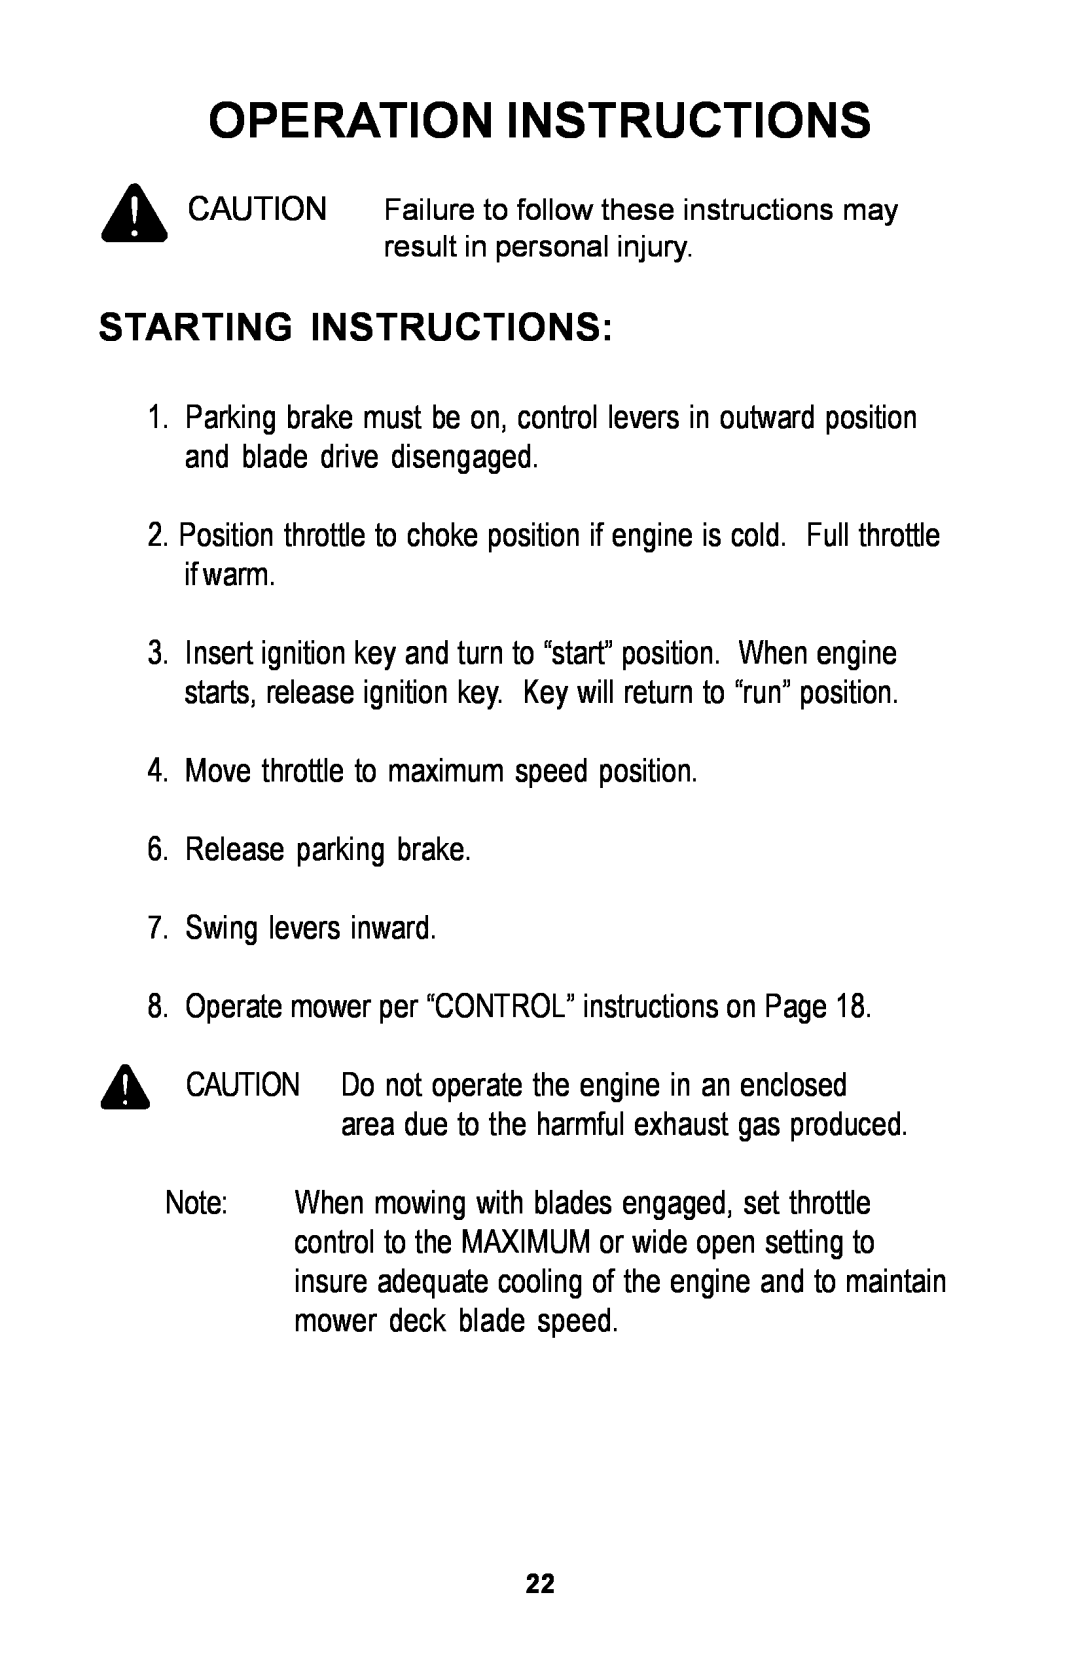 Dixon 30 manual Starting Instructions, Operation Instructions 